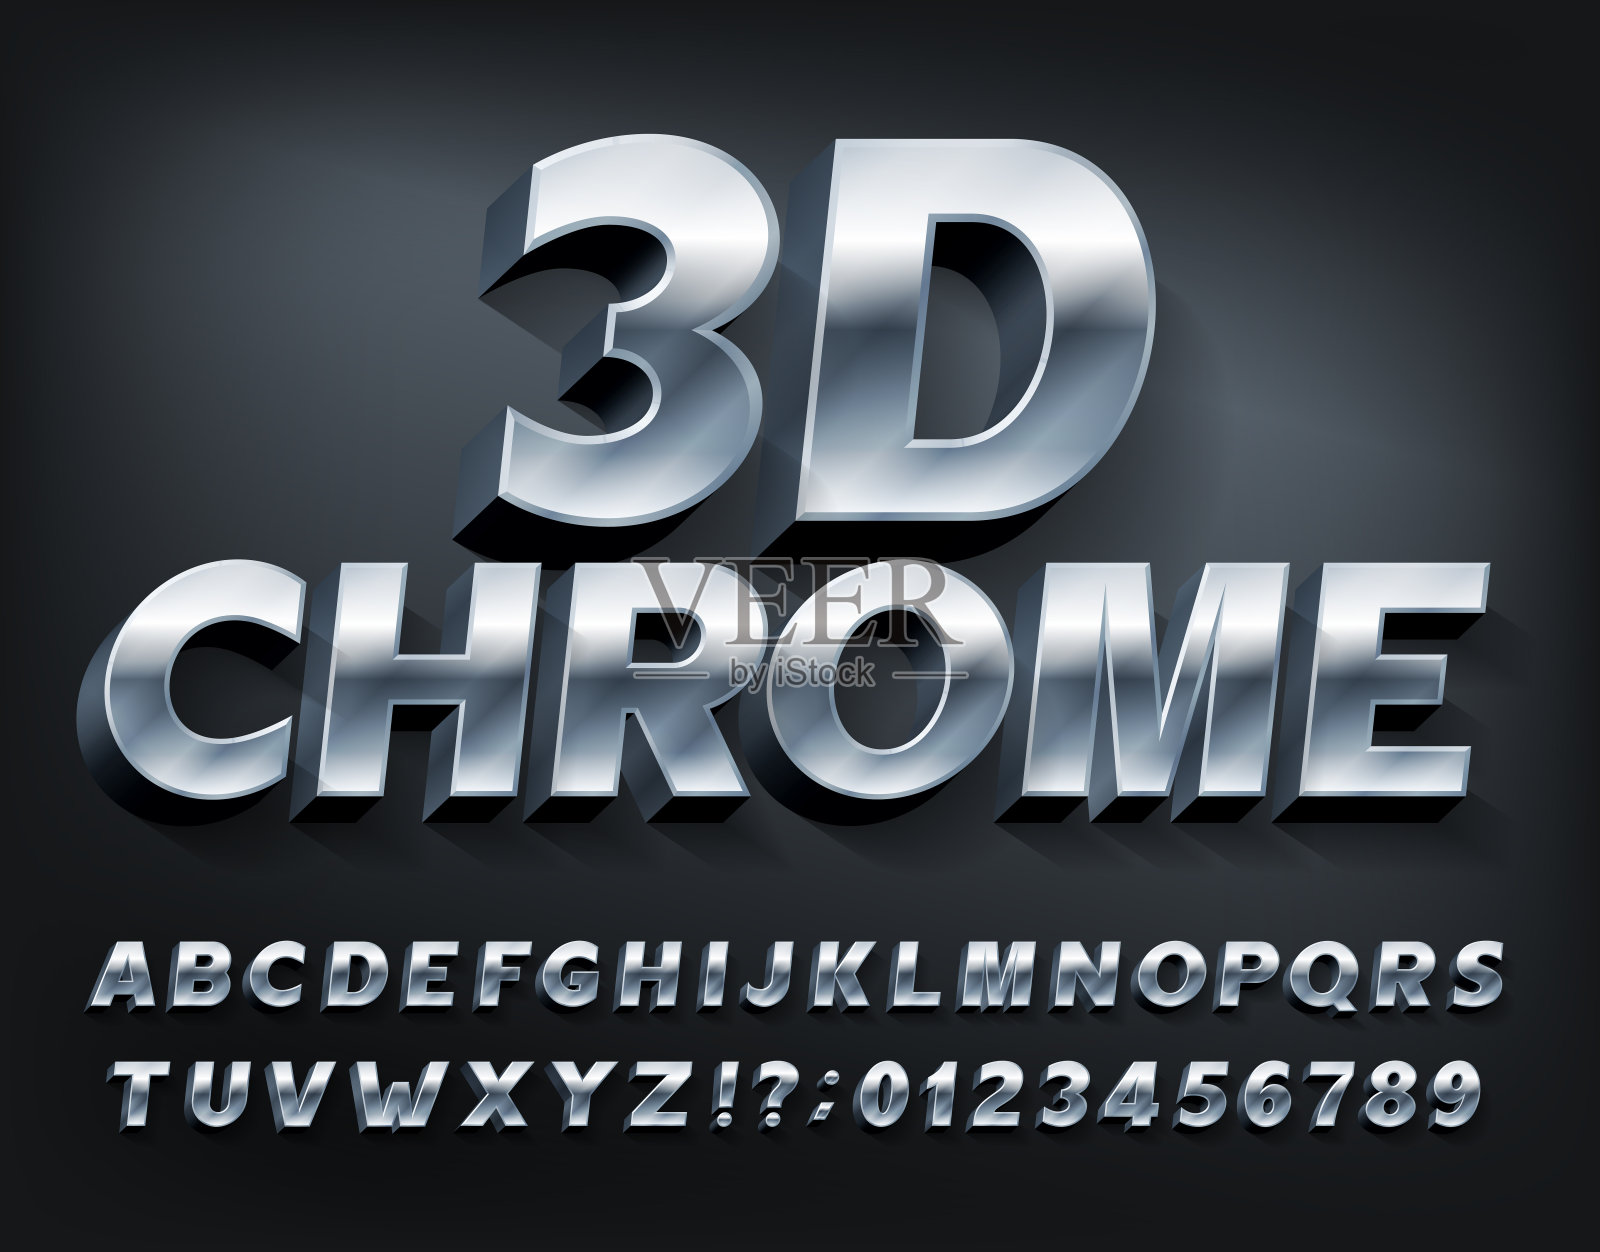 3D Chrome字母字体。带有阴影的金属字母和数字。插画图片素材